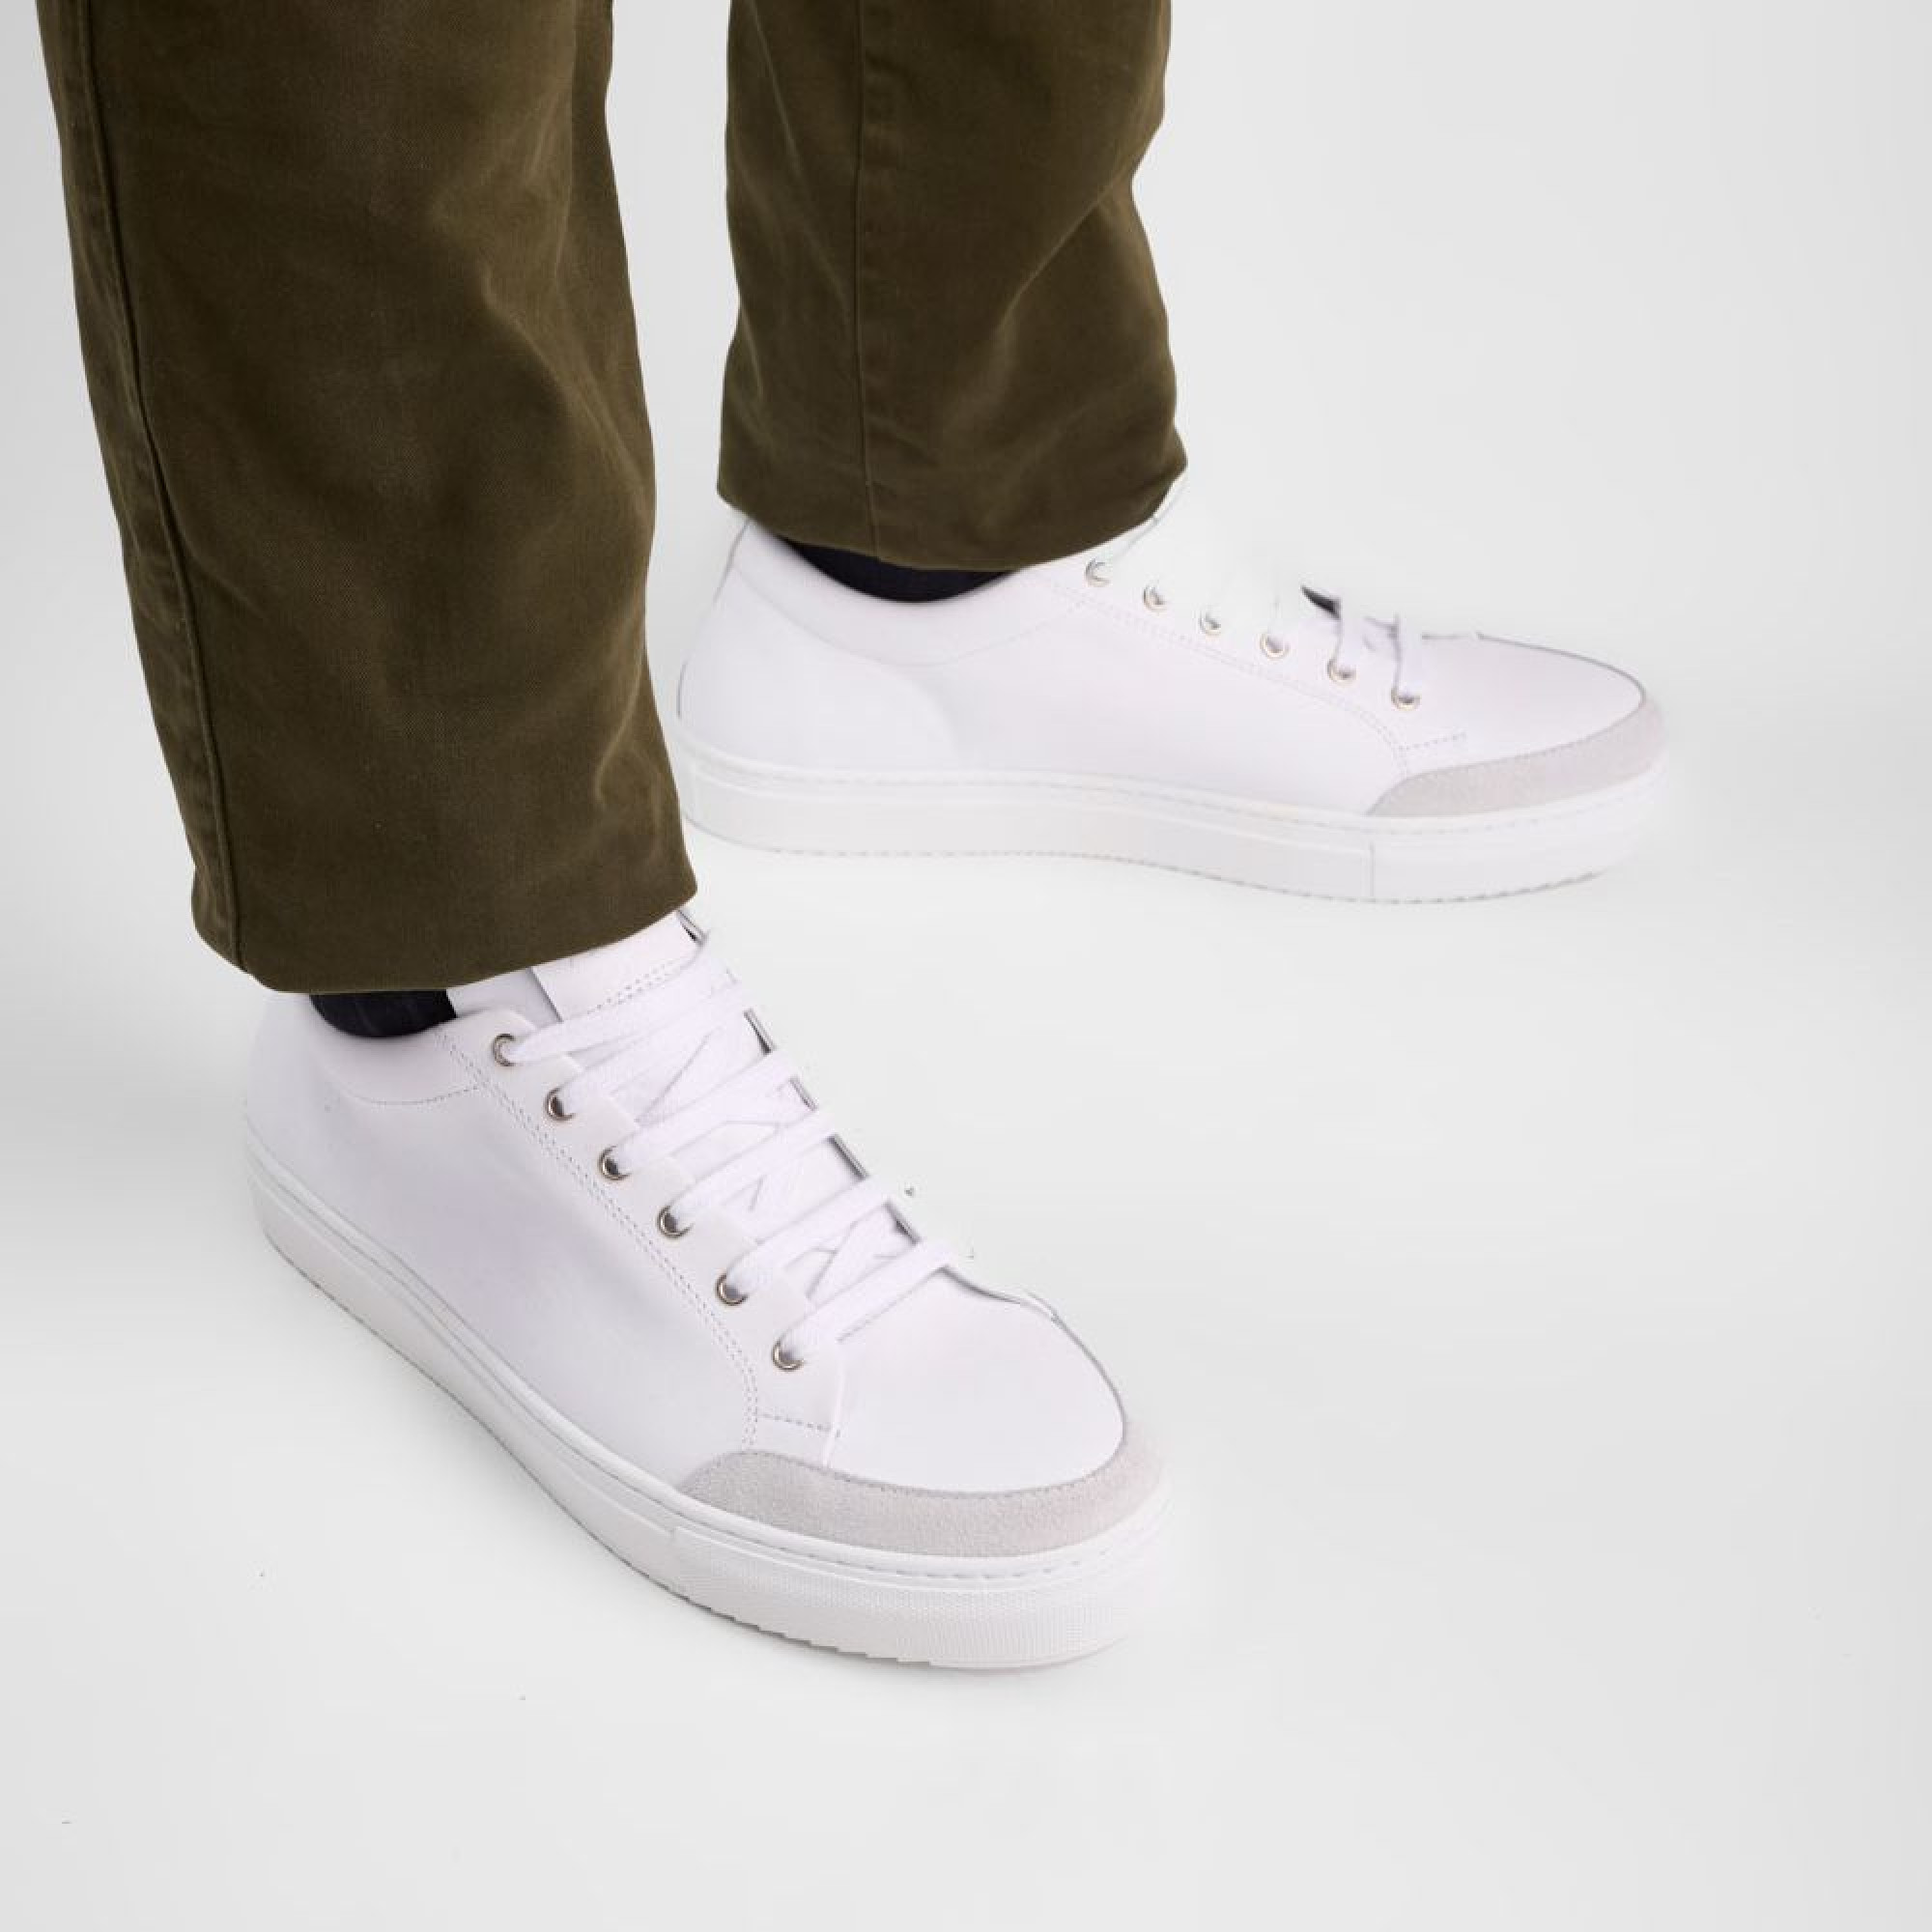 https://www.hardrige.com/image/cache/catalog/homme/Sneakers/jo-blanc/basket-homme-blanche-haut-de-gamme-jo-blanc-hardrige-2000x2000.jpg